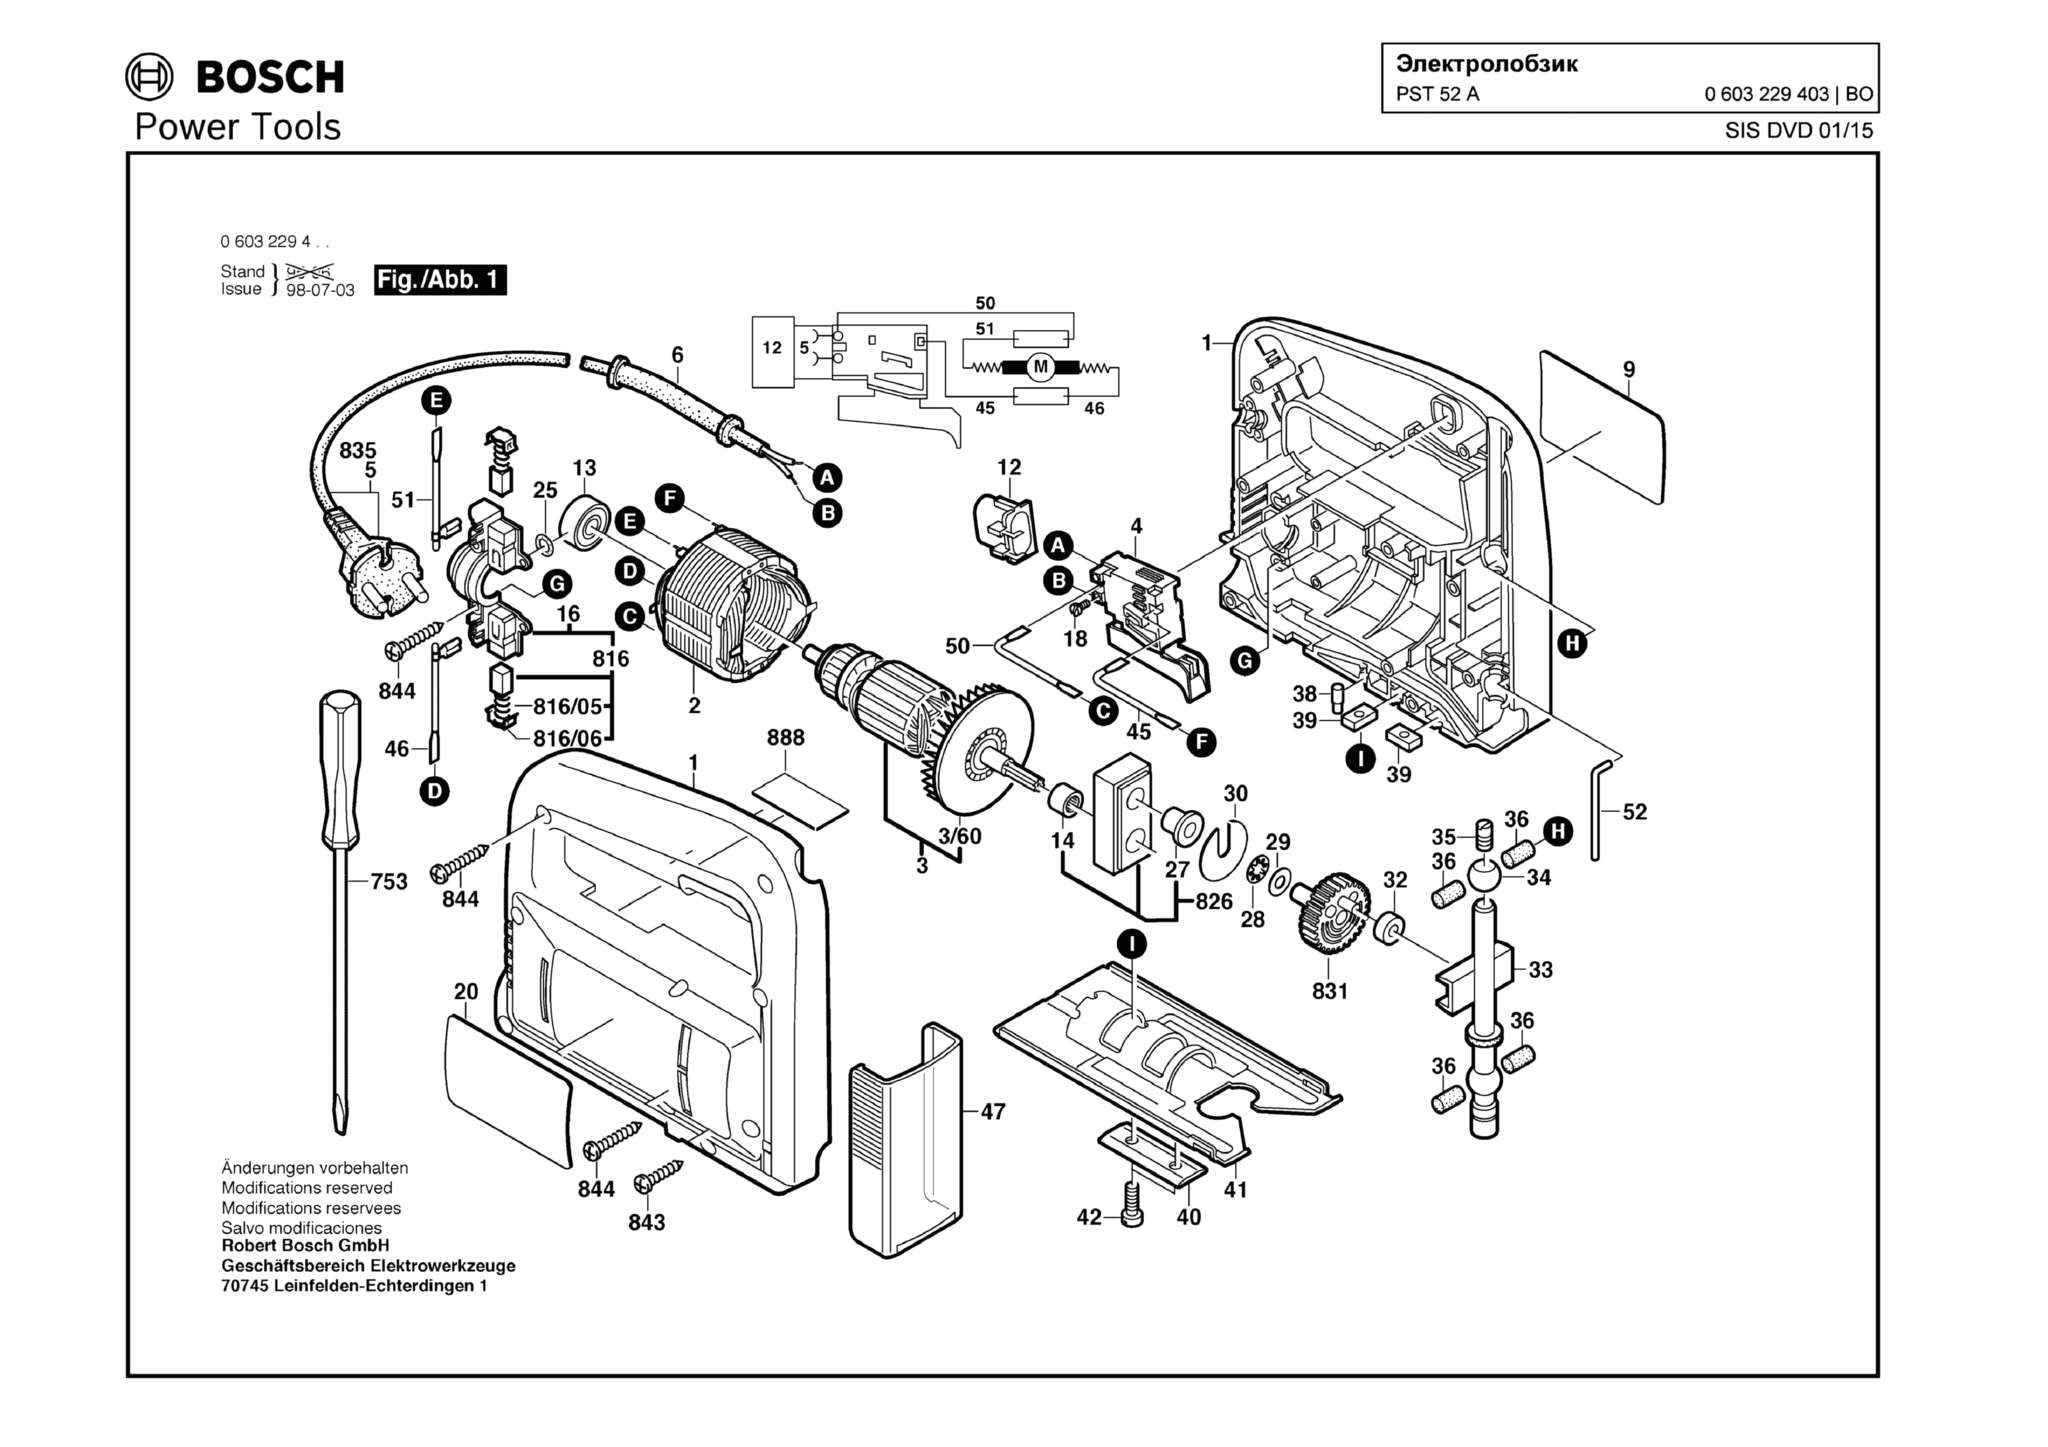 Запчасти, схема и деталировка Bosch PST 52 A (ТИП 603229403)